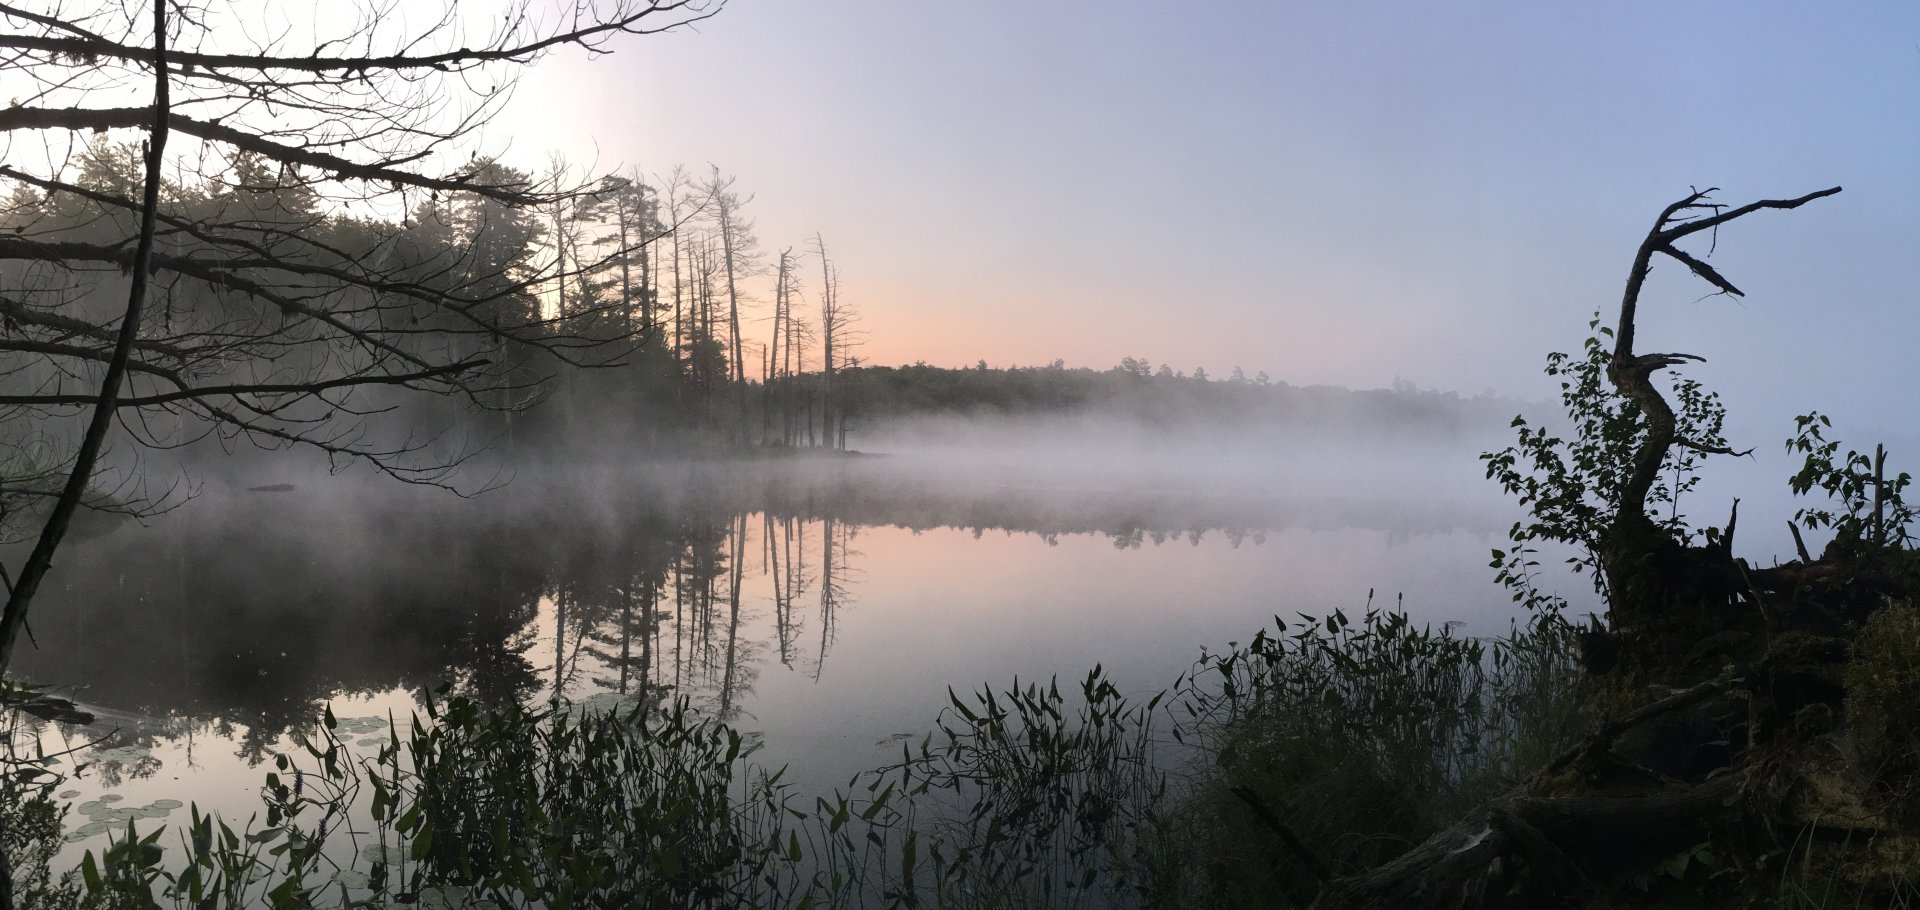 A foggy Silver Lake, Au Sable Forks, New York